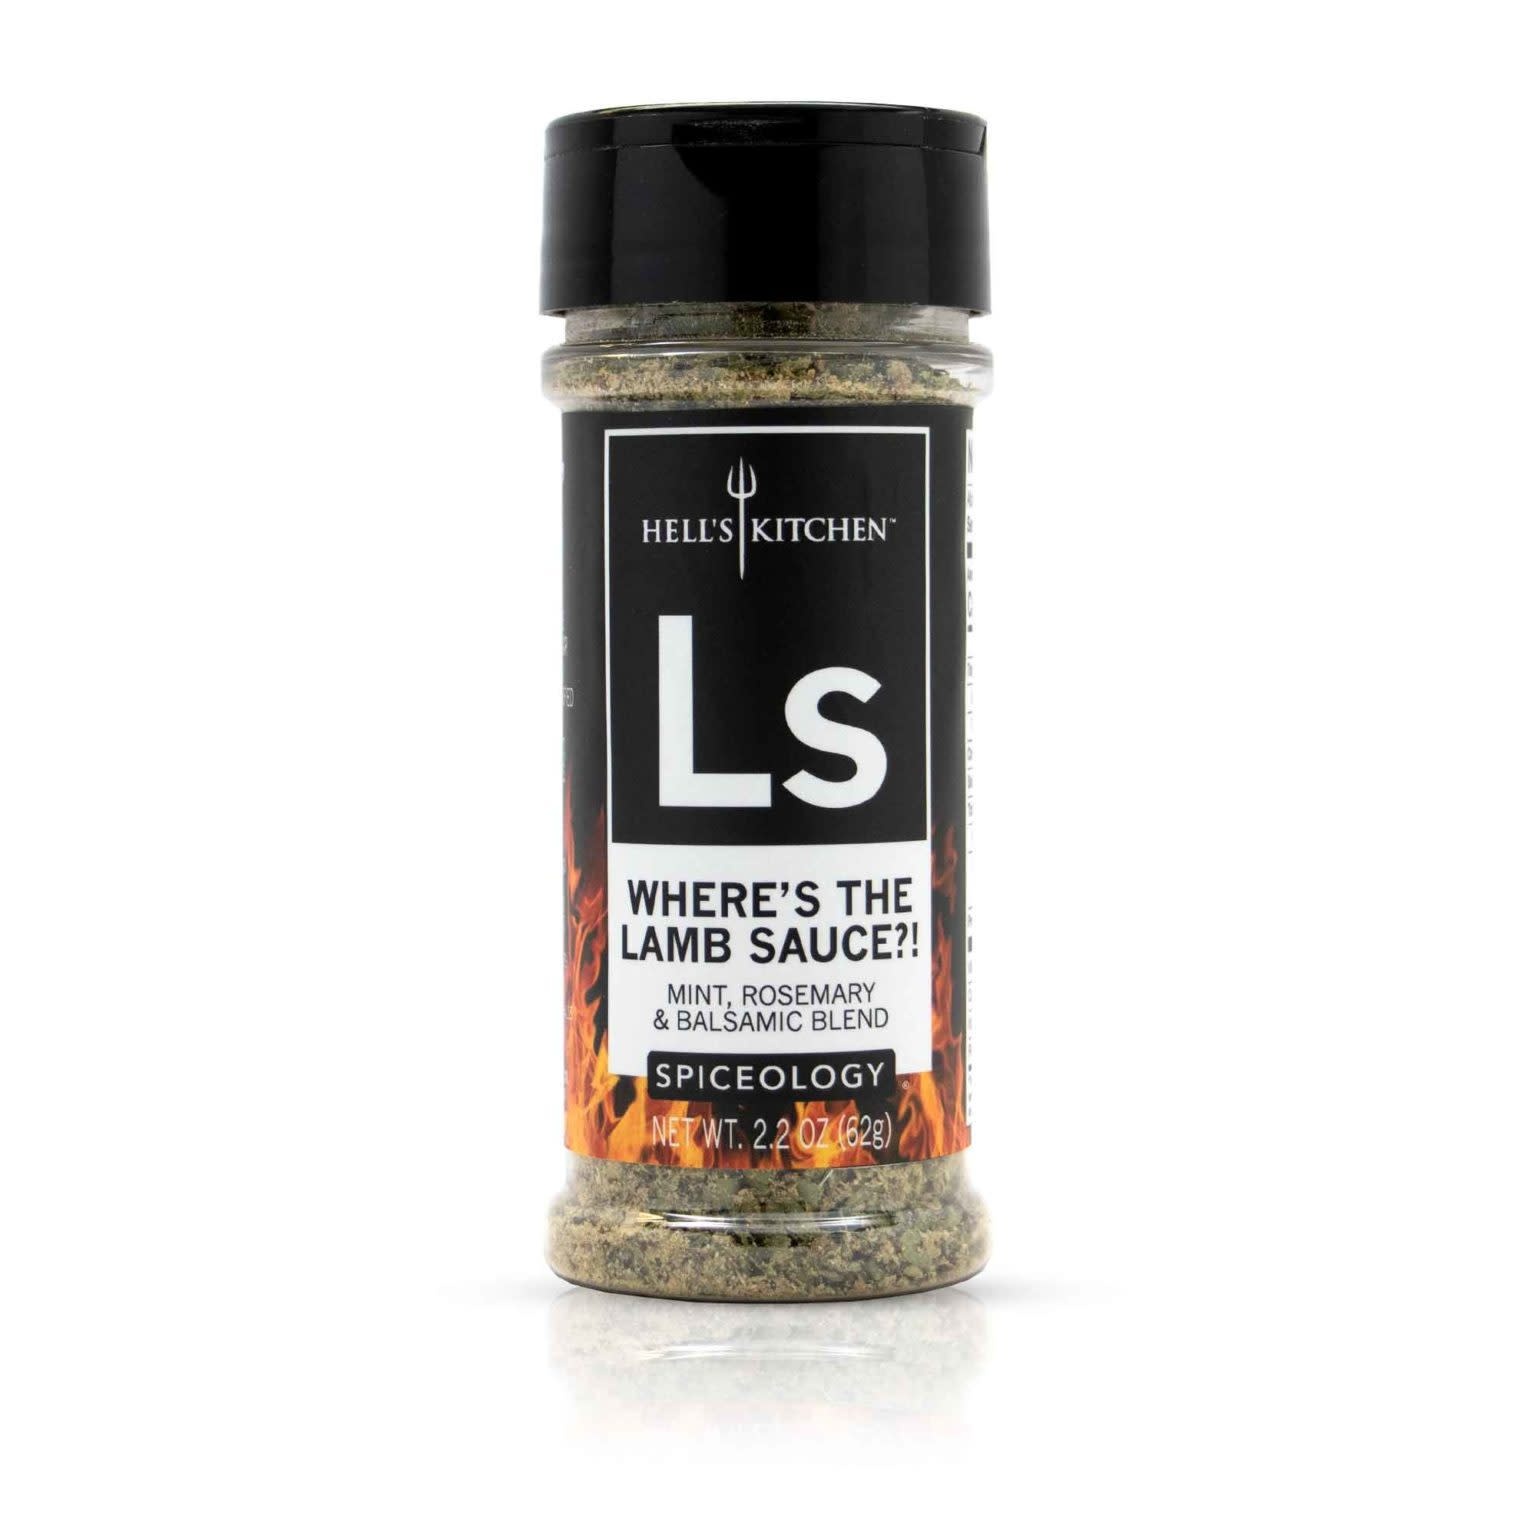 Spiceology Hell’s Kitchen- Where’s the Lamb Sauce?! Seasoning